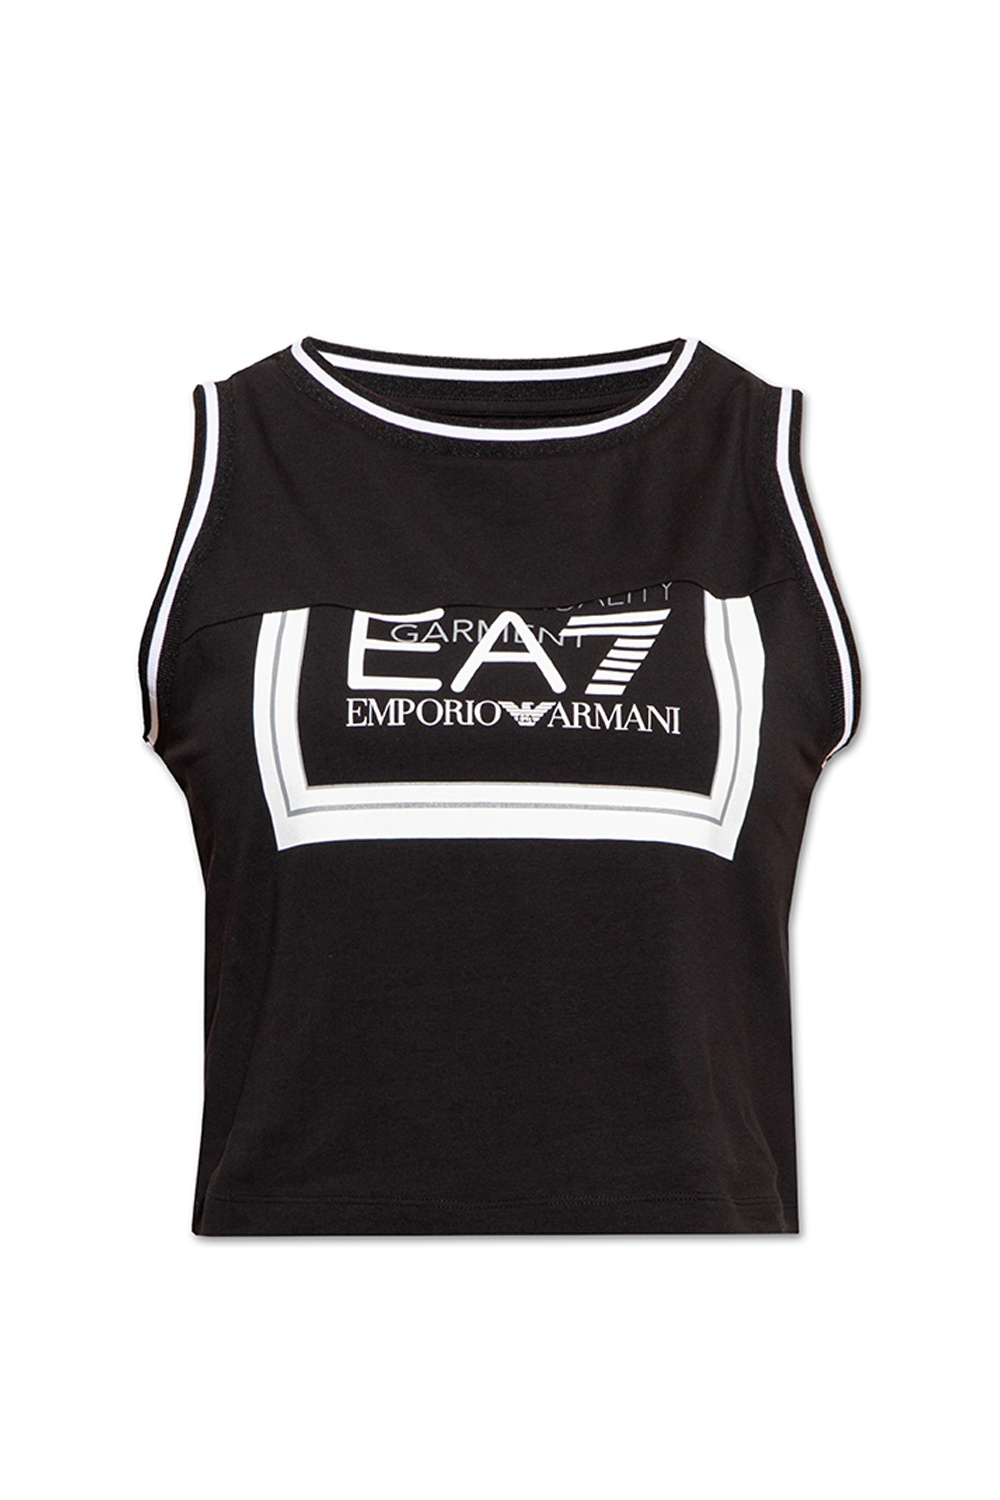 EA7 Emporio Armani Sleeveless top | Women's Clothing | IetpShops